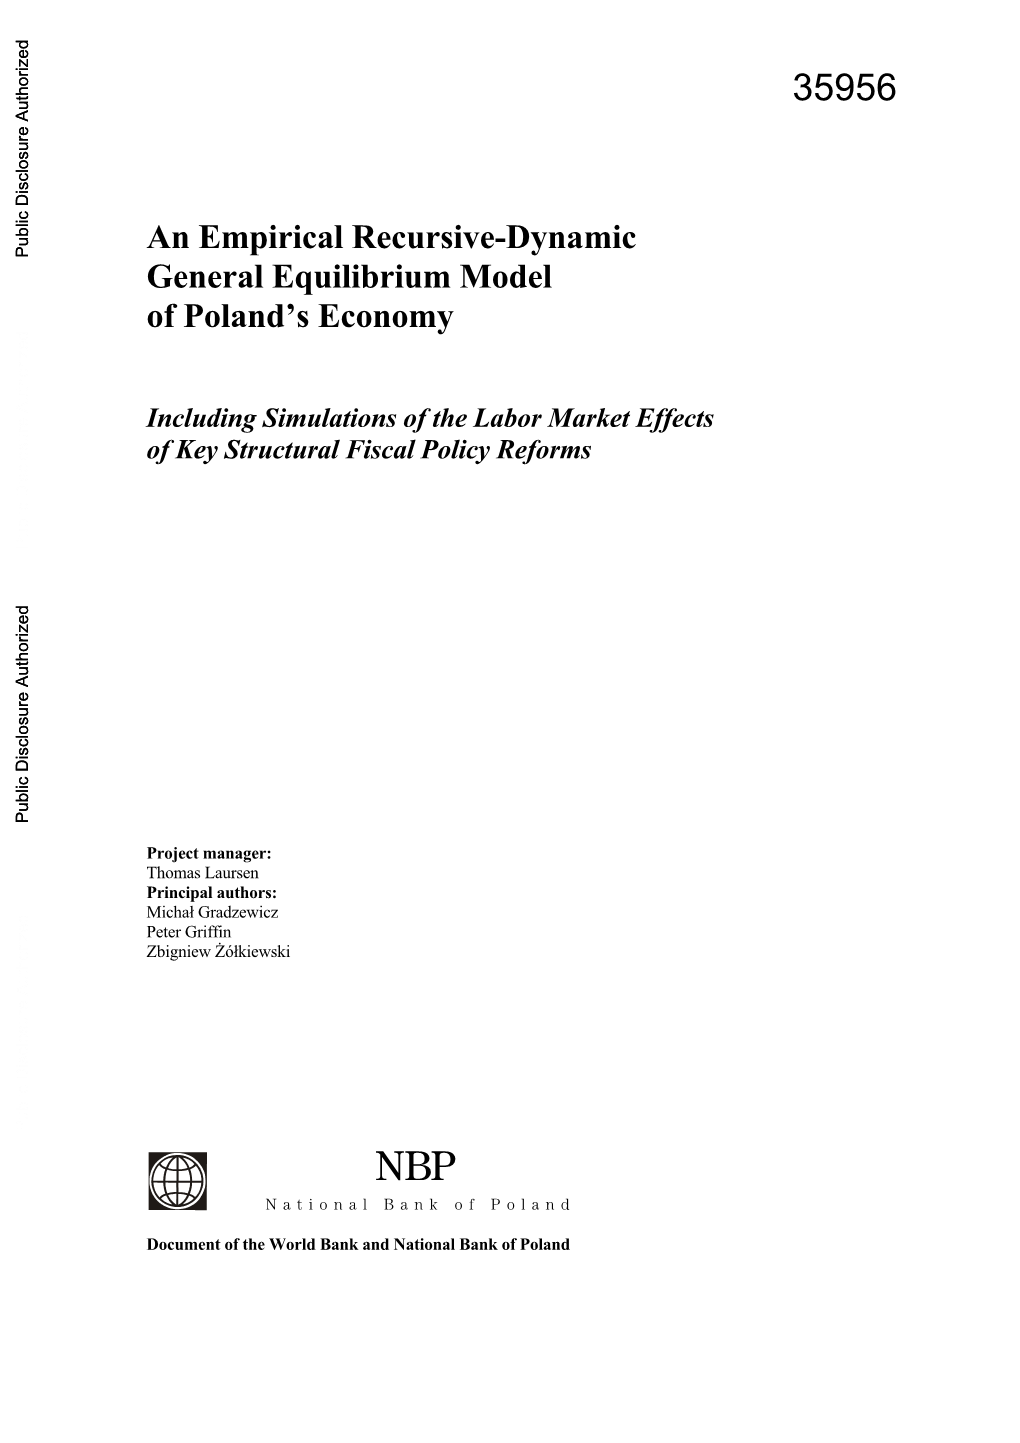 An Empirical Recursive-Dynamic General